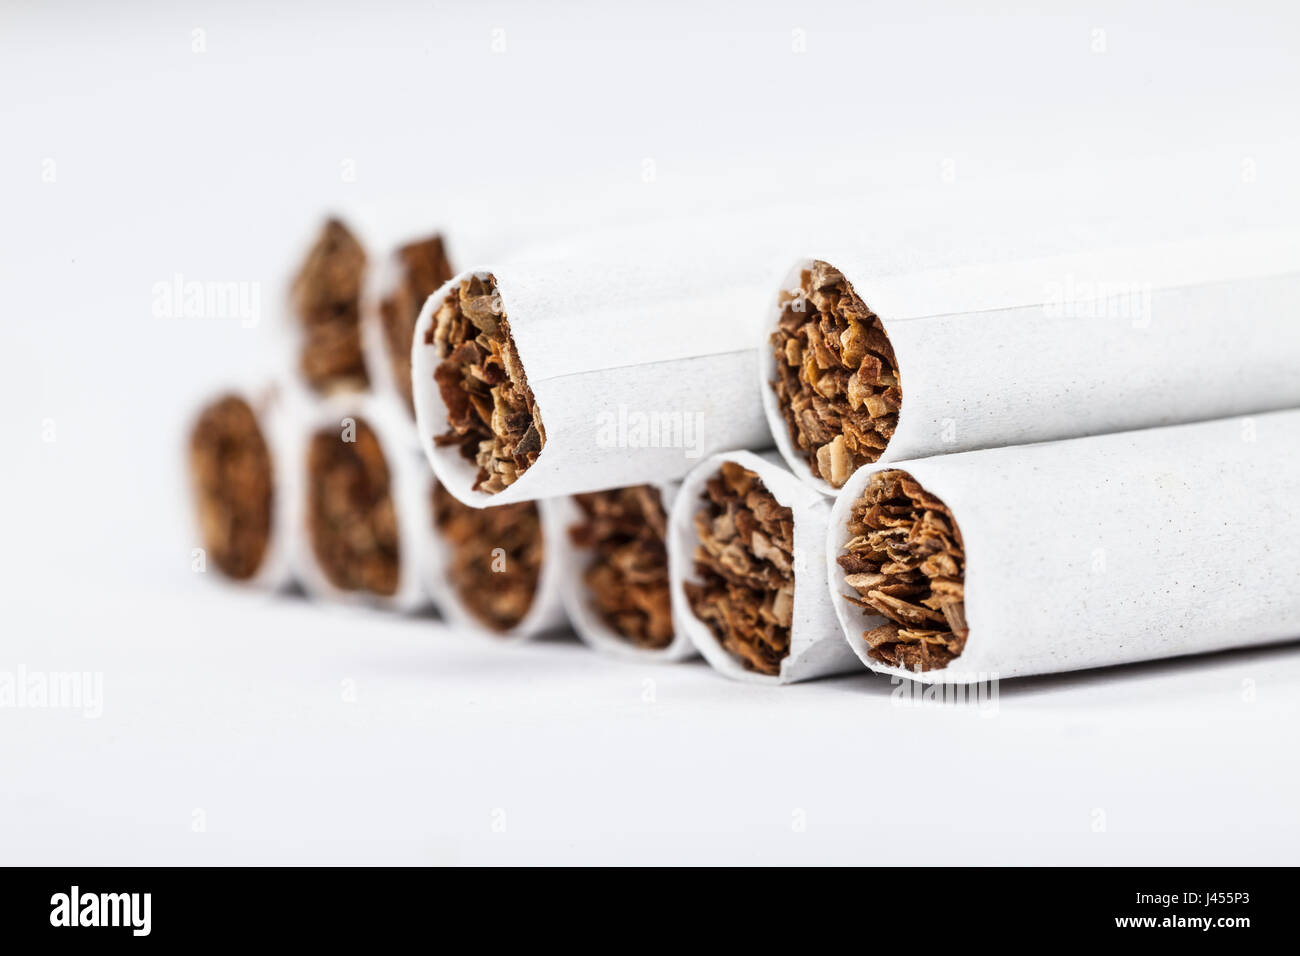 Pile of cigarettes Stock Photo